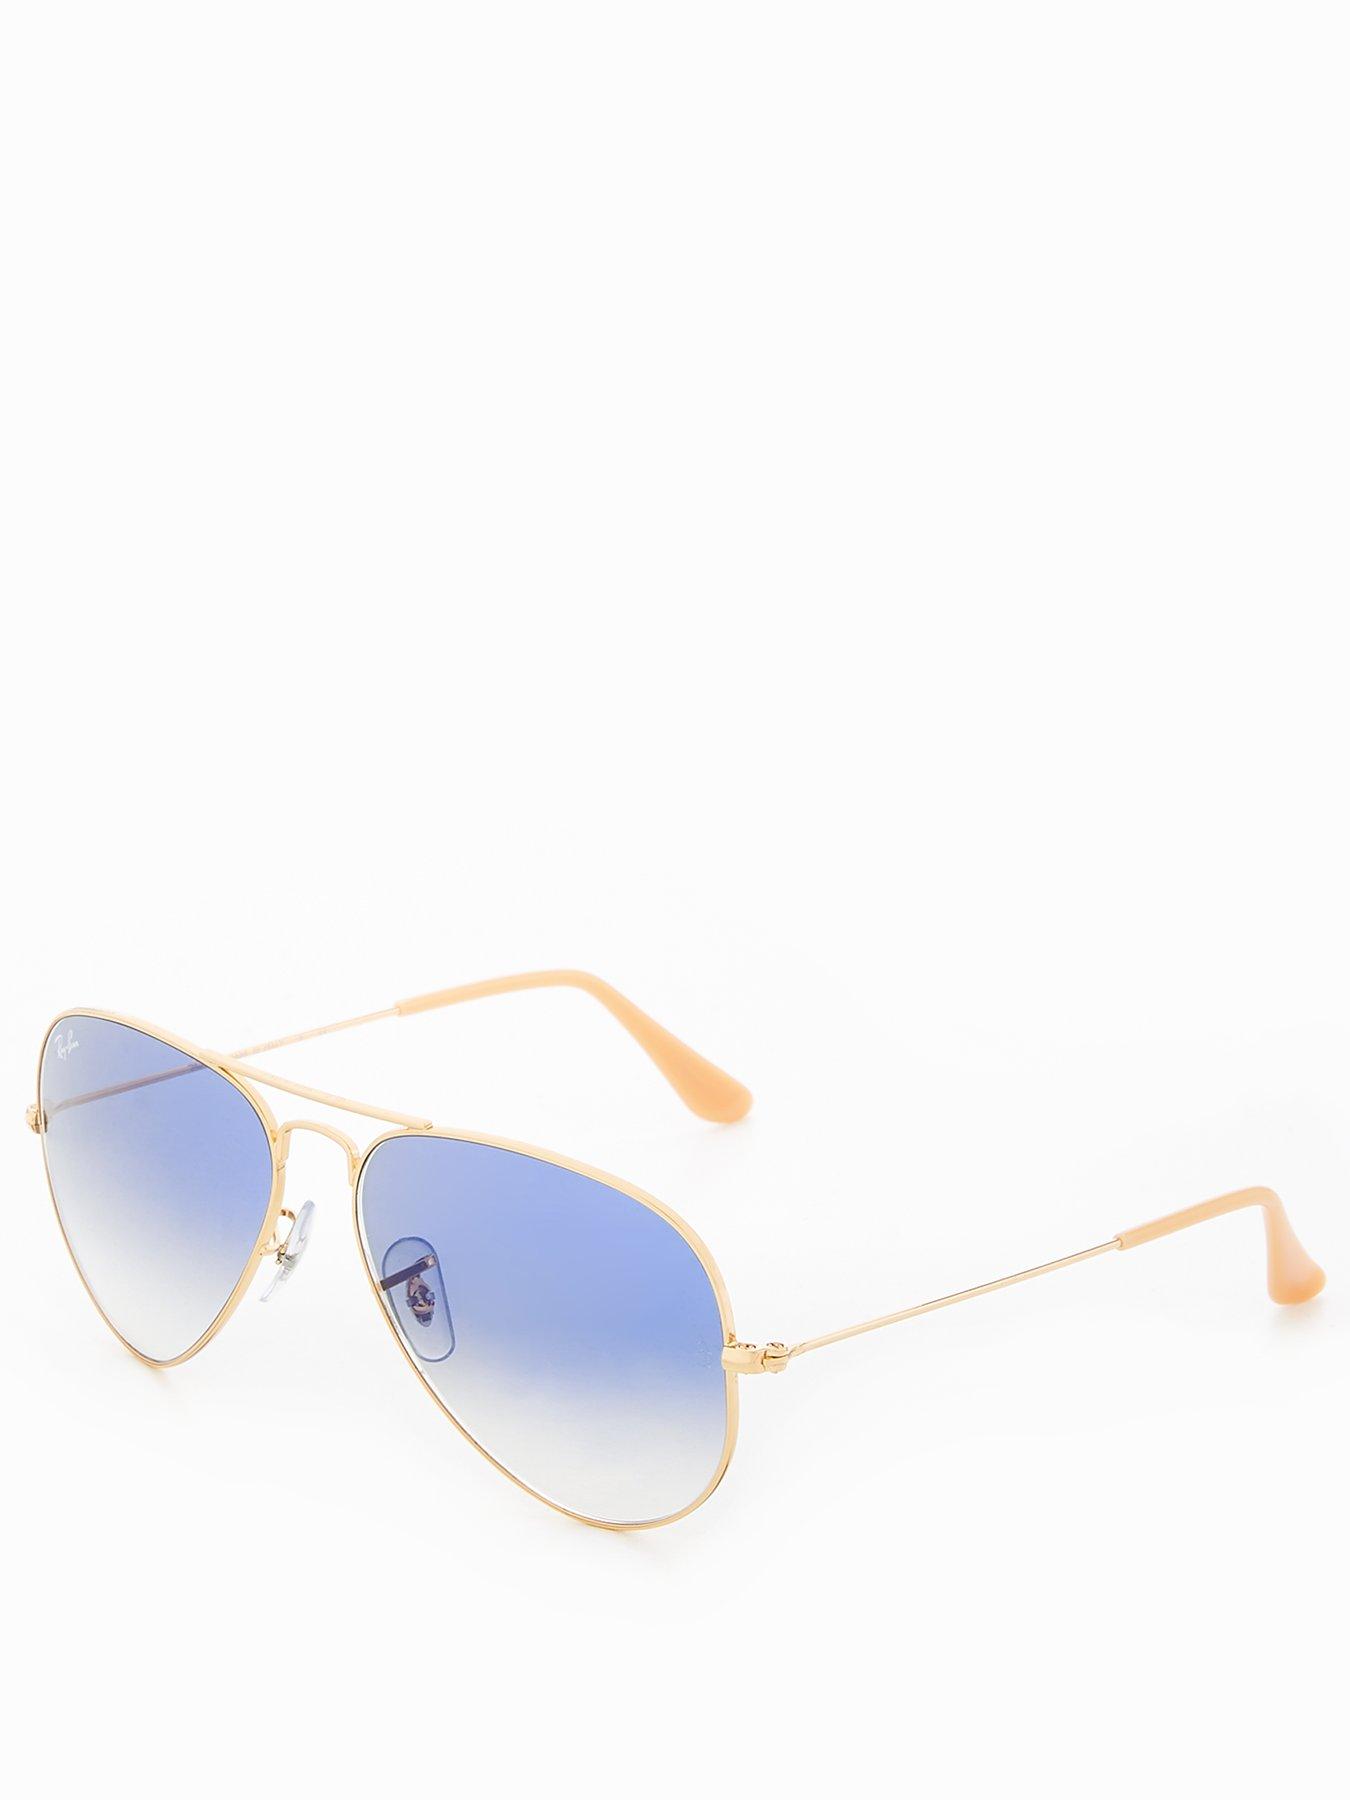  Aviator Sunglasses - Gold